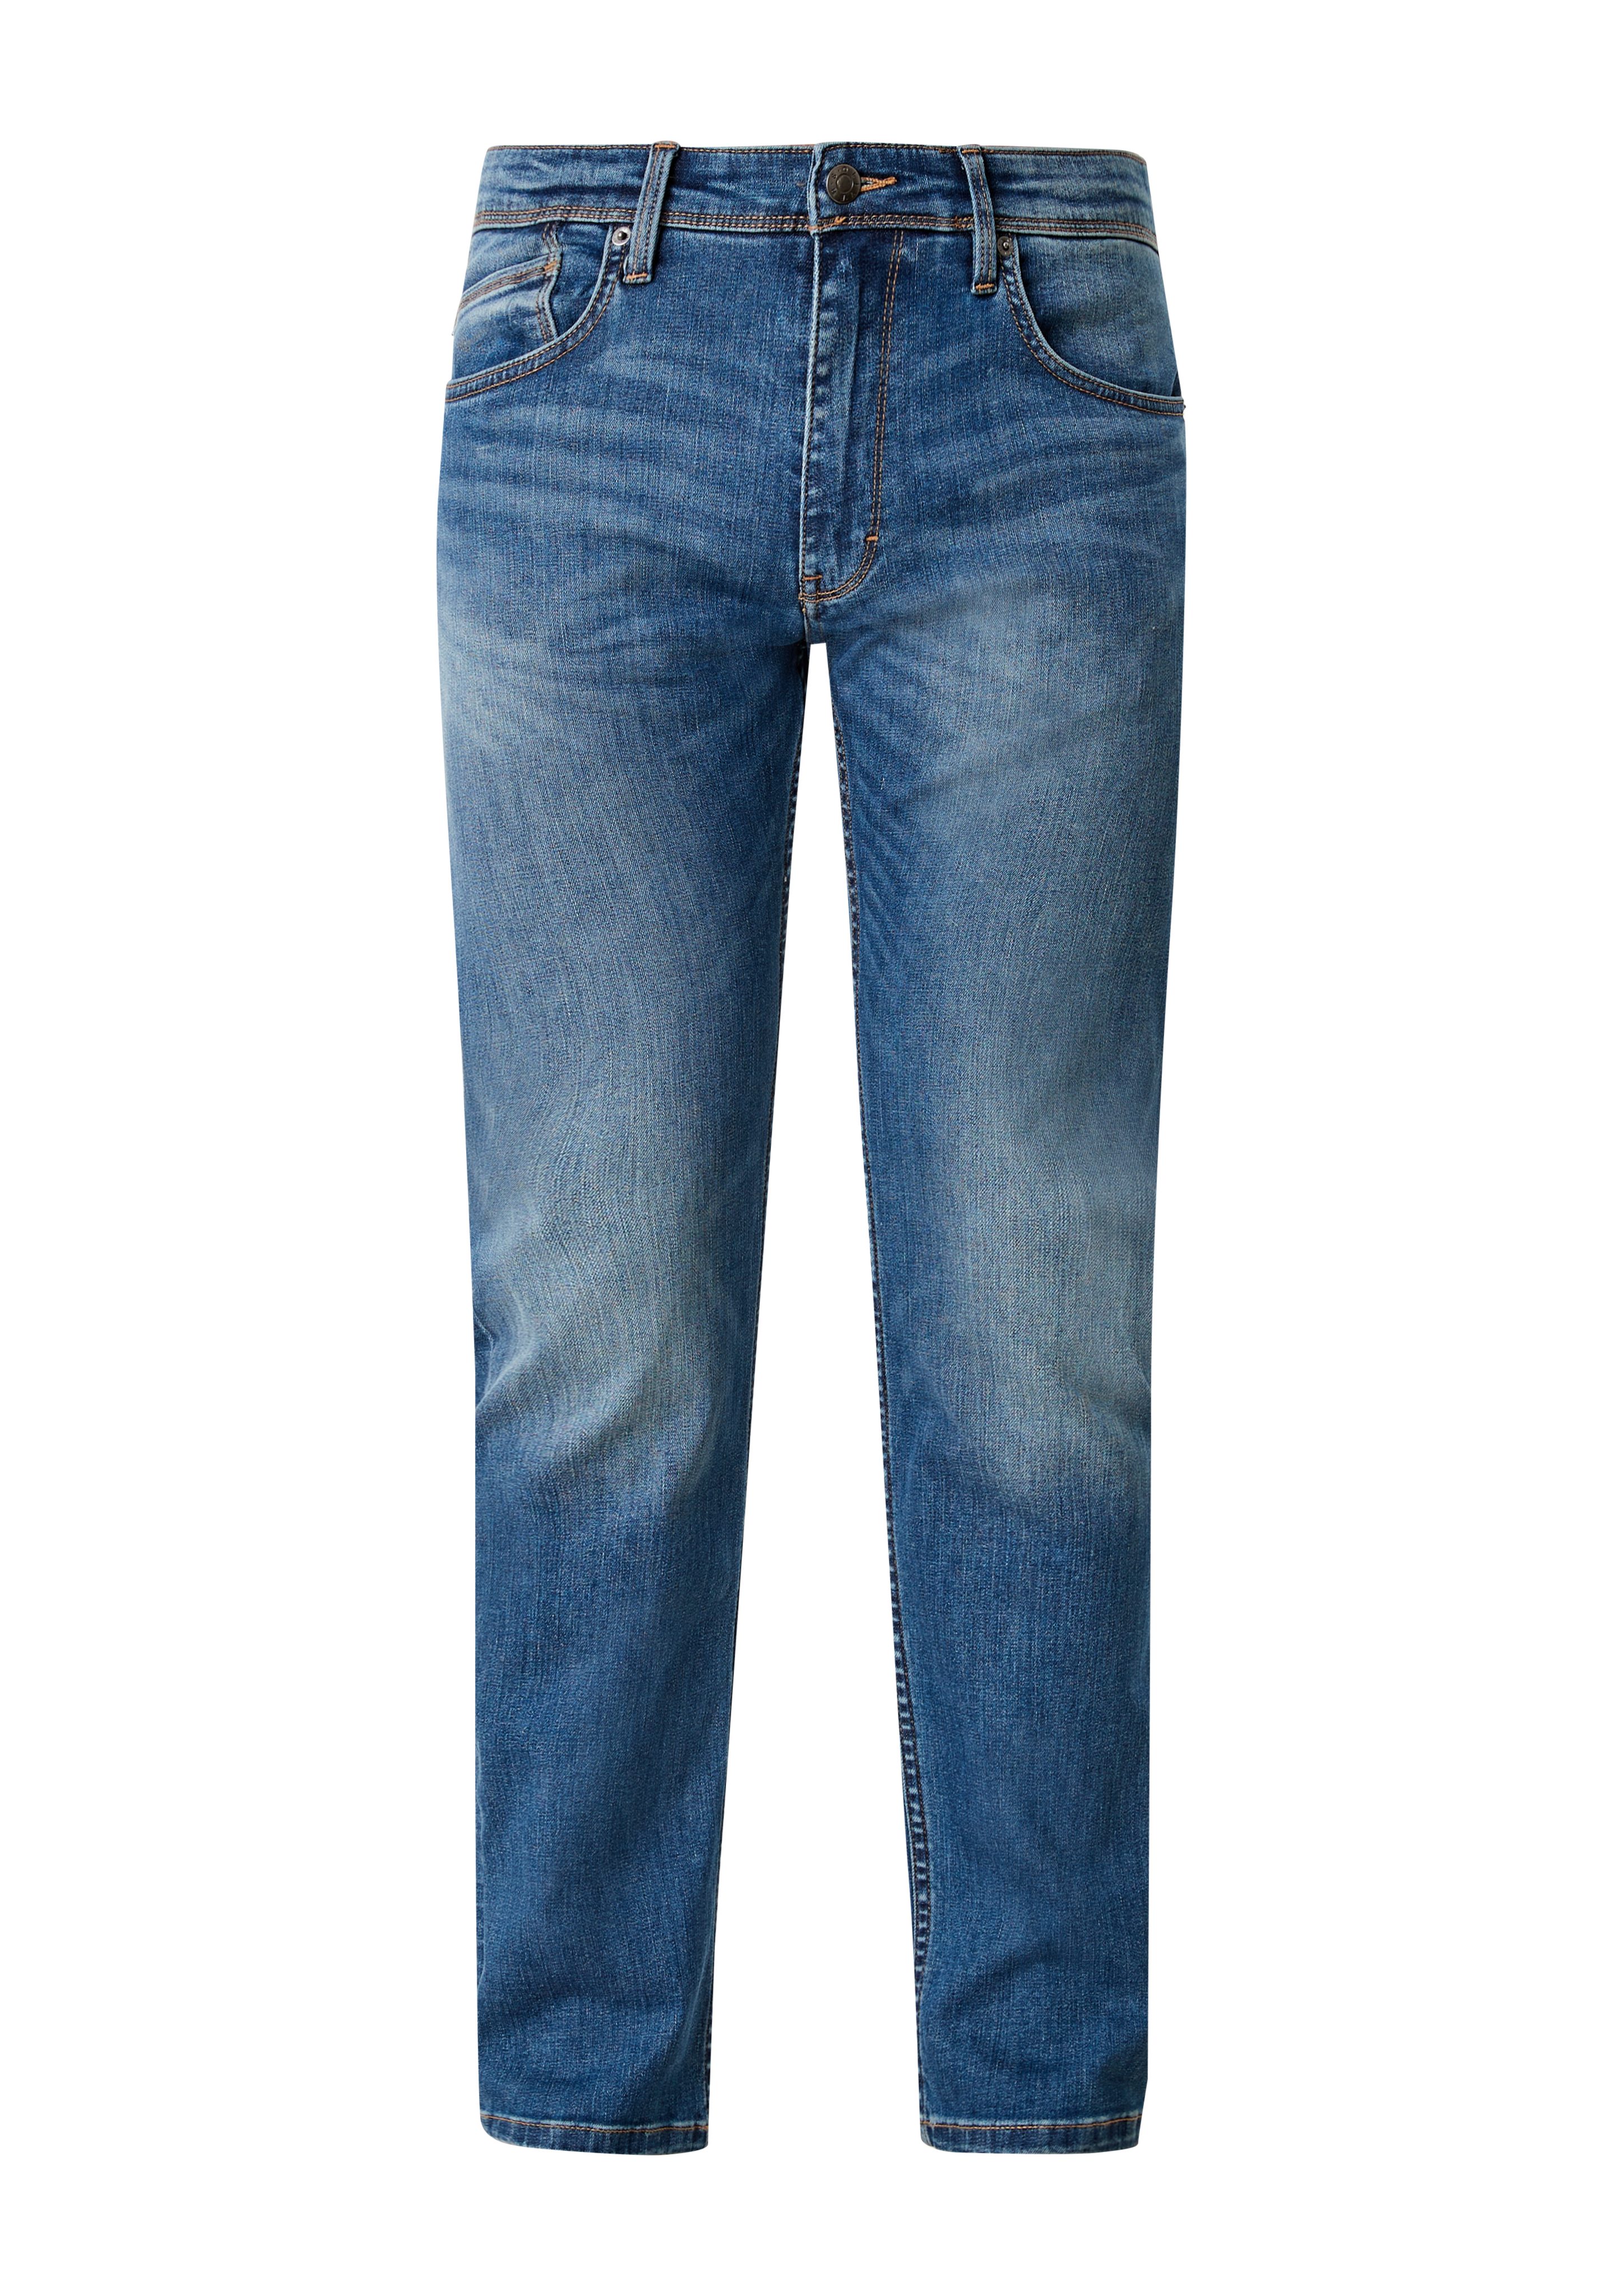 Keith Rise Jeans Mid / Slim / Leg s.Oliver blue Fit Slim Waschung / 5-Pocket-Jeans Leder-Patch,